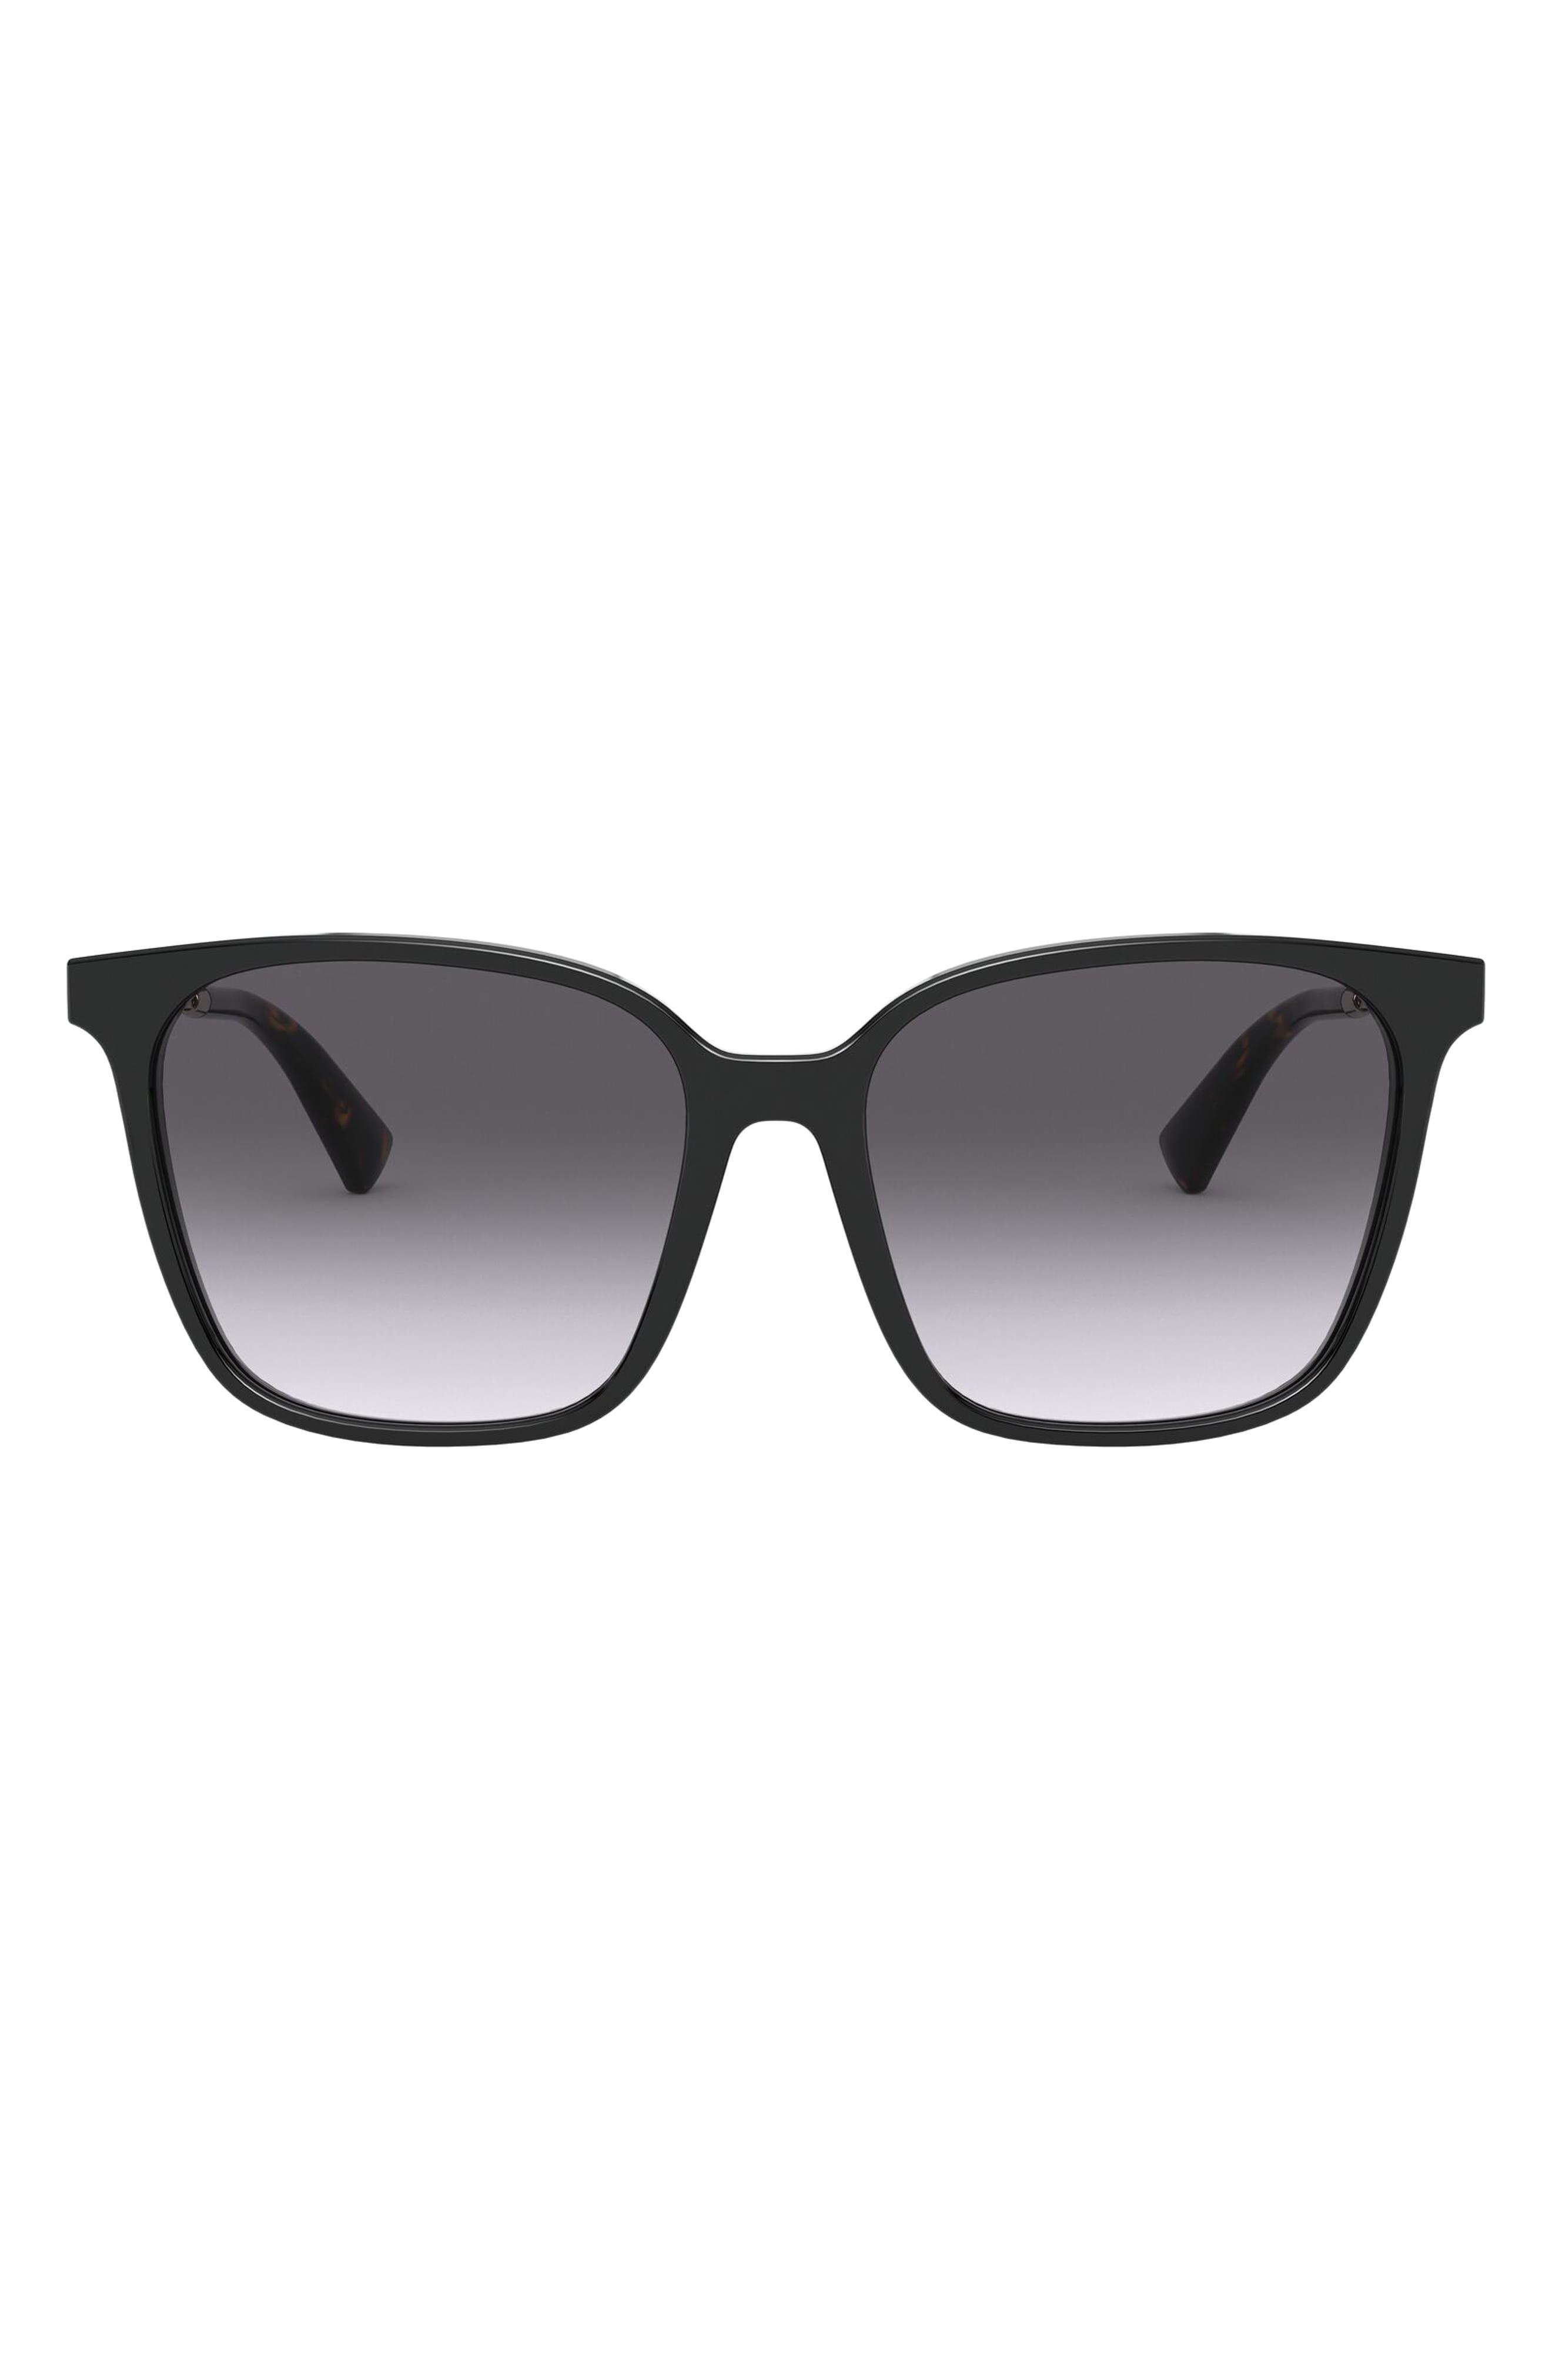 Valentino Rockstud 57mm Gradient Square Sunglasses in Black/Black Gradient at Nordstrom